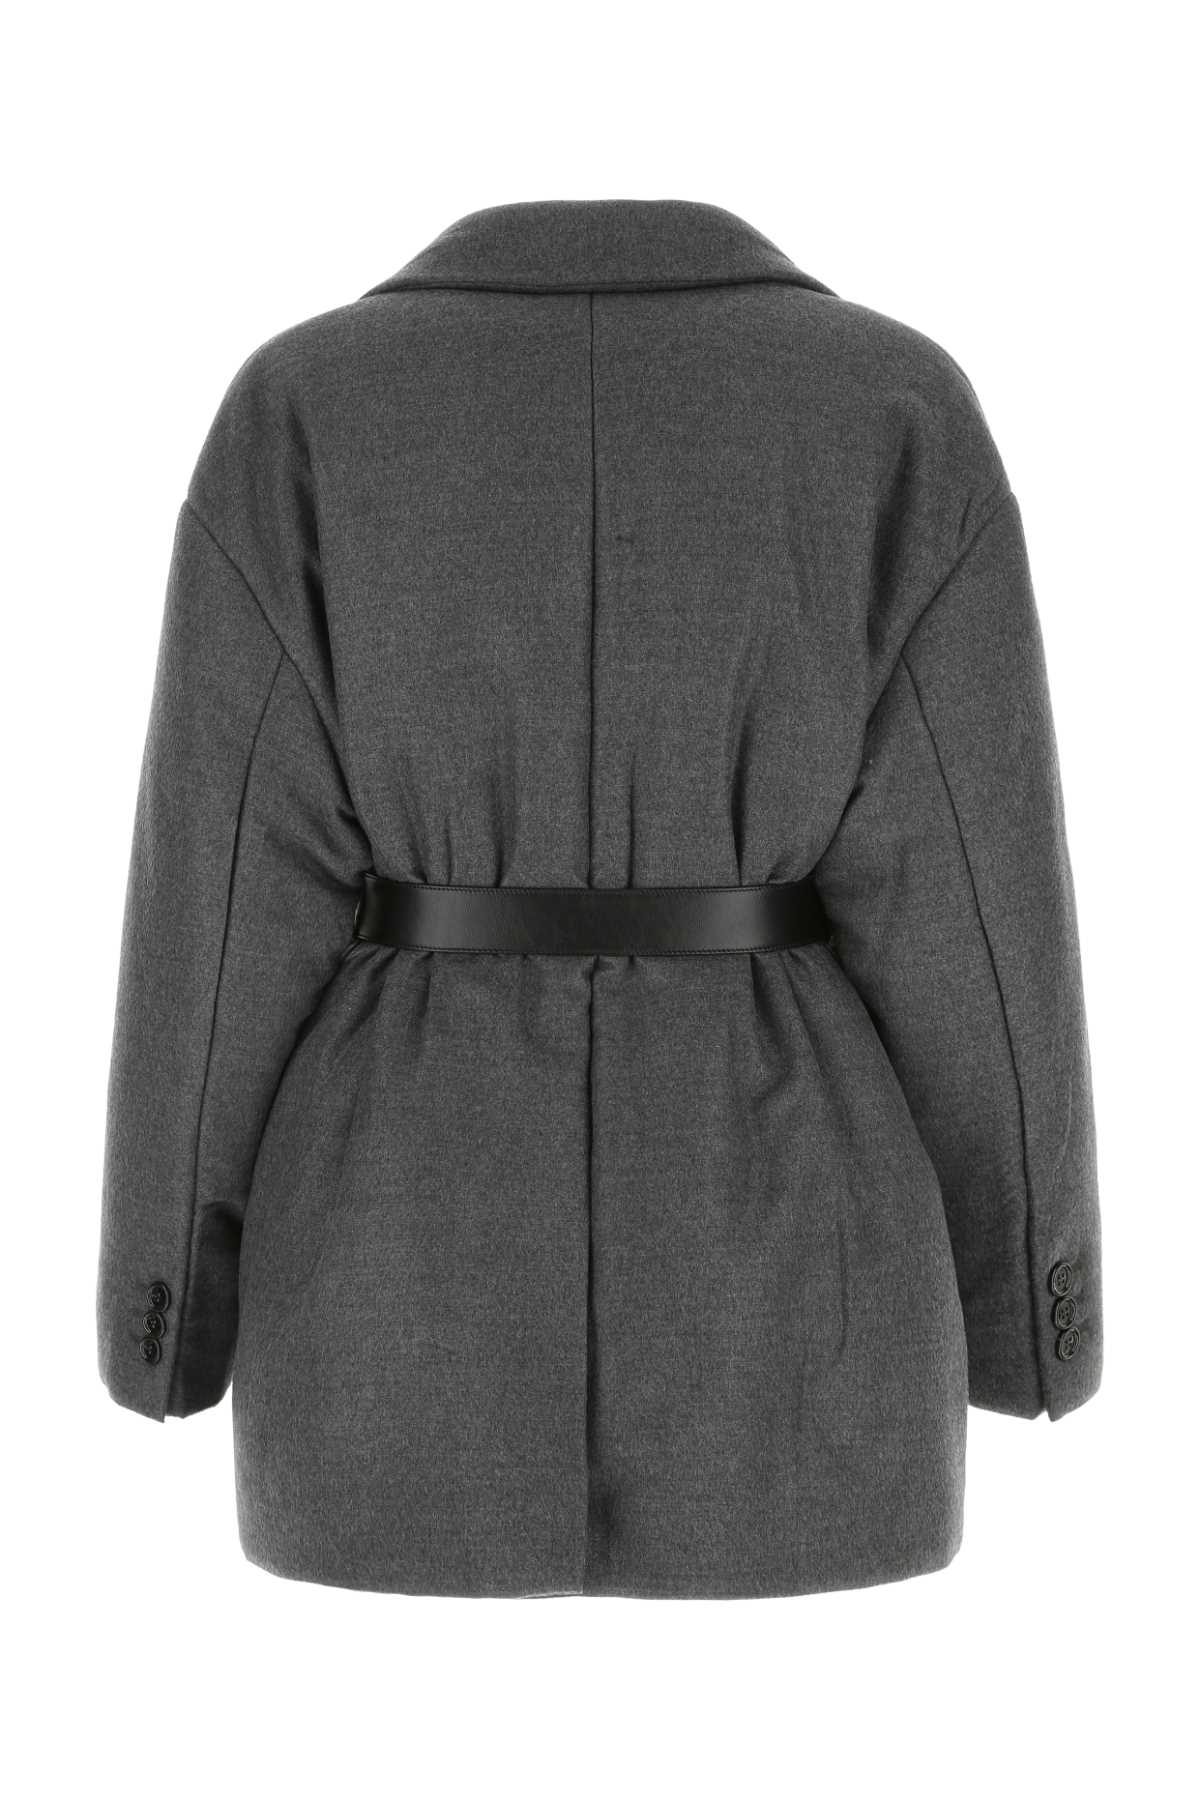 Prada Melange Dark Grey Wool Blend Blazer In F0480